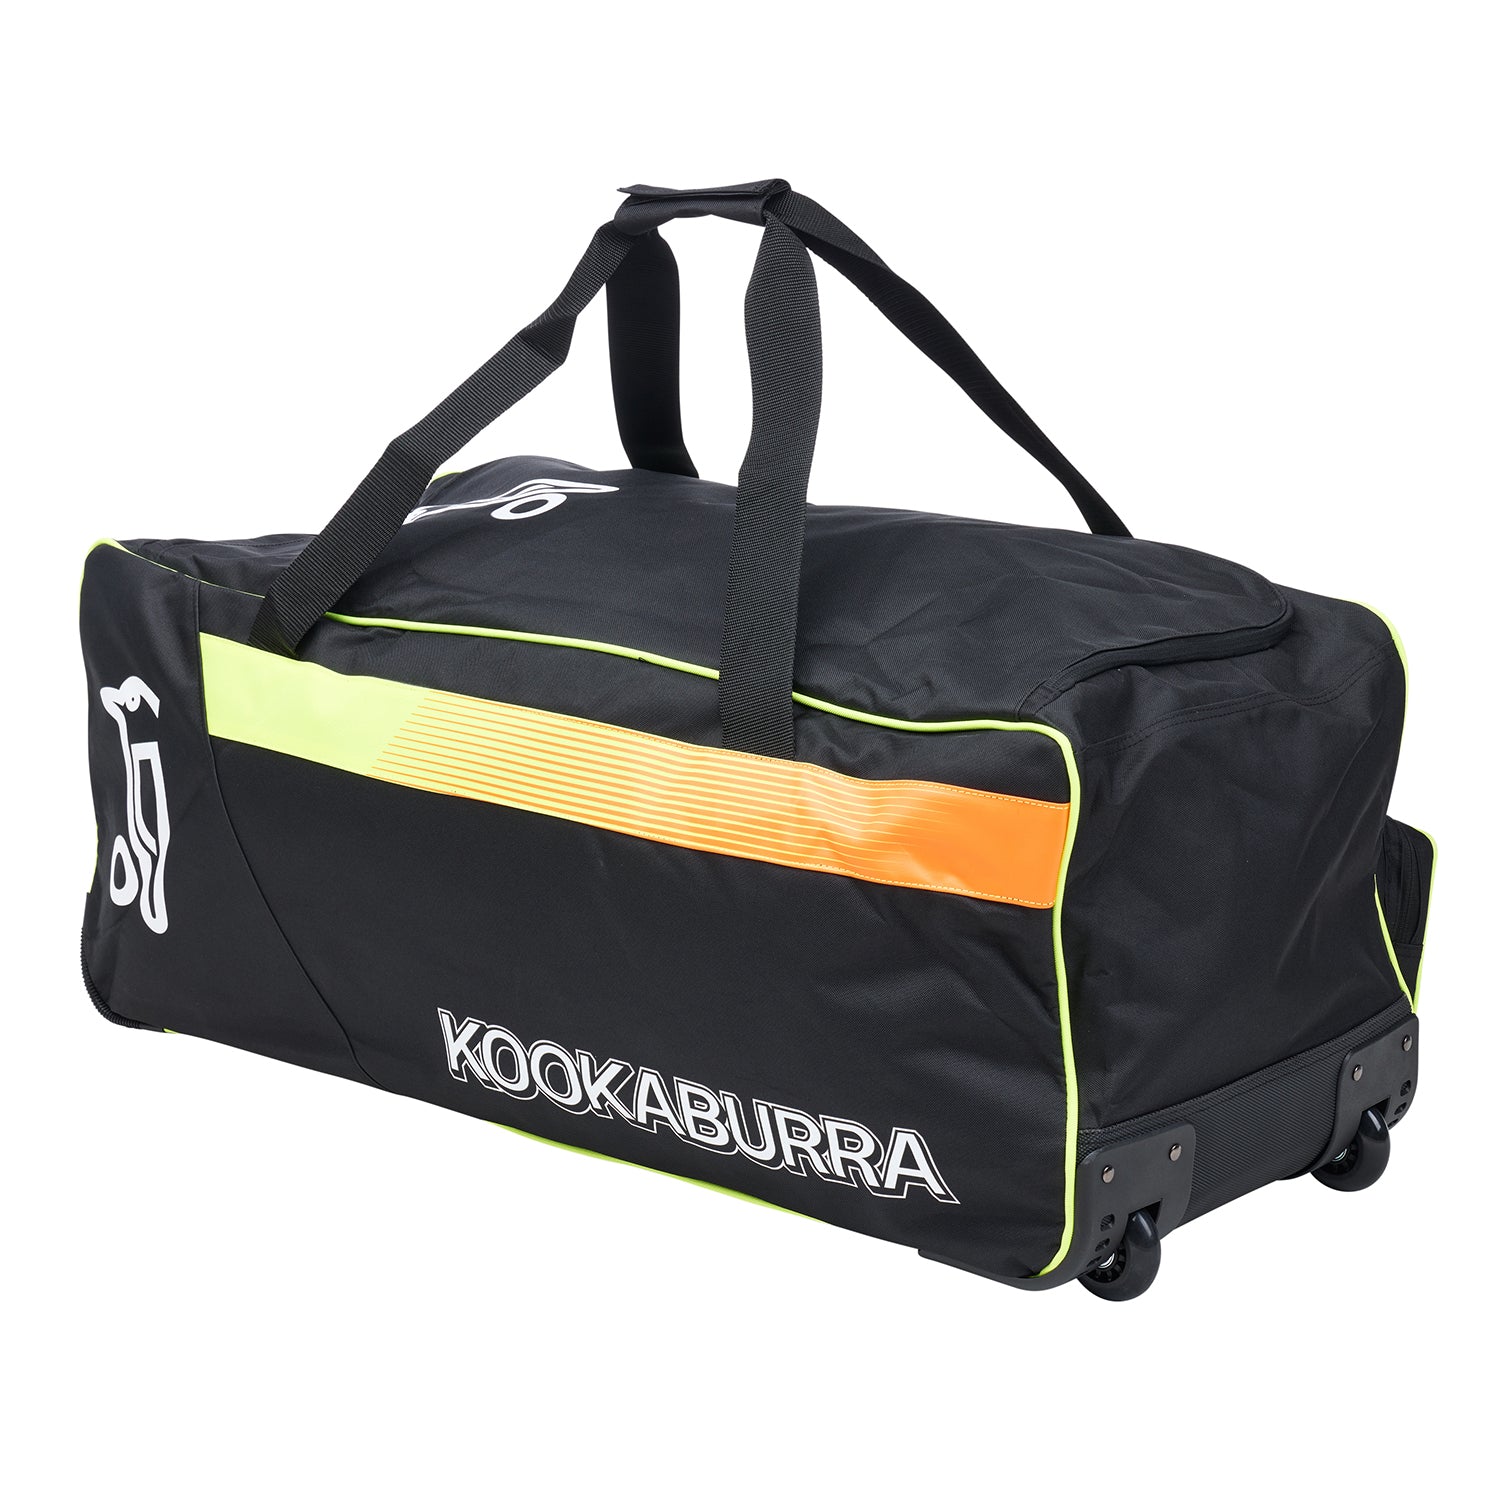 Kookaburra Pro 3.0 Cricket Wheelie Bag